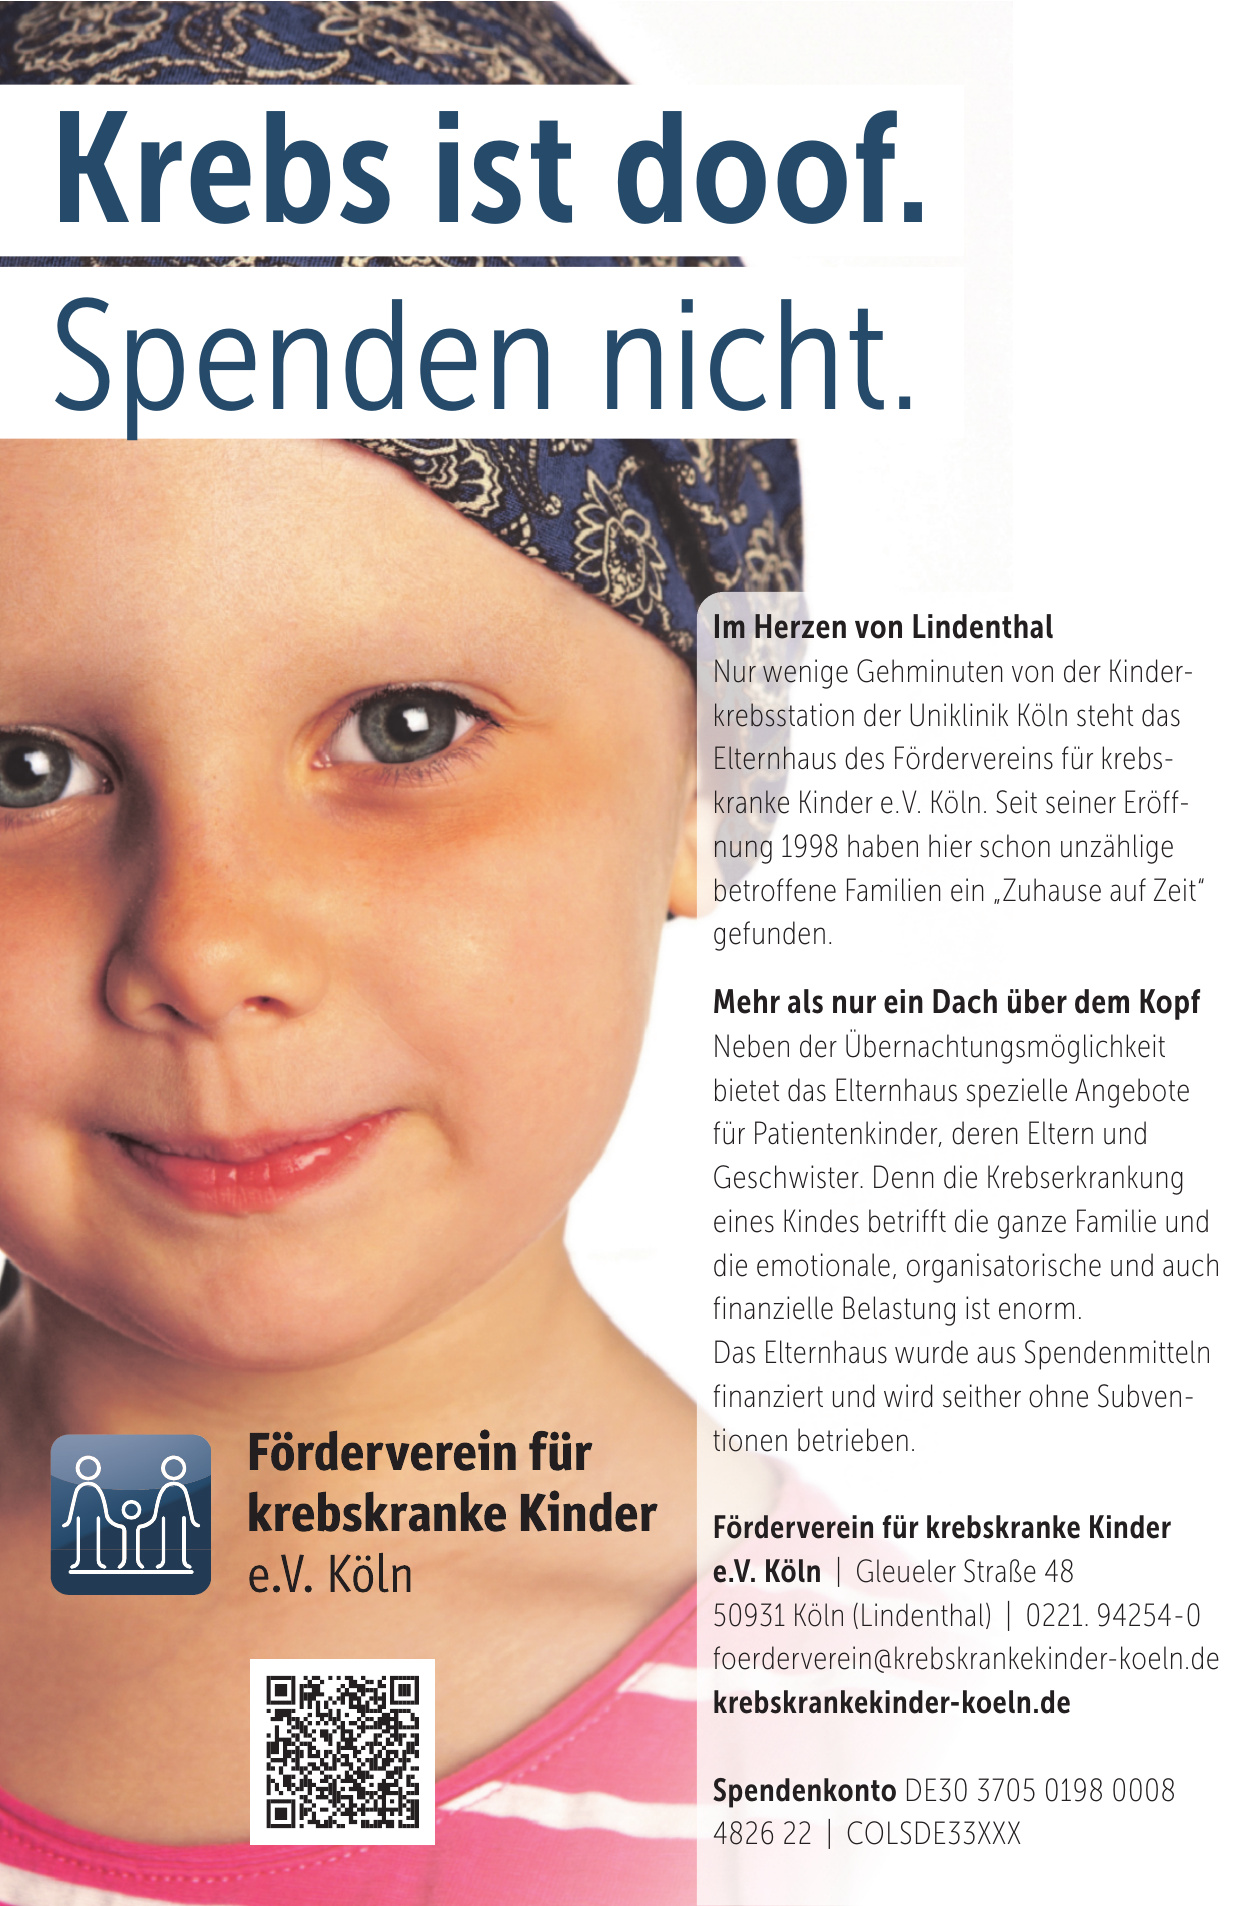 Förderverein für krebskranke Kinder e.V. Köln